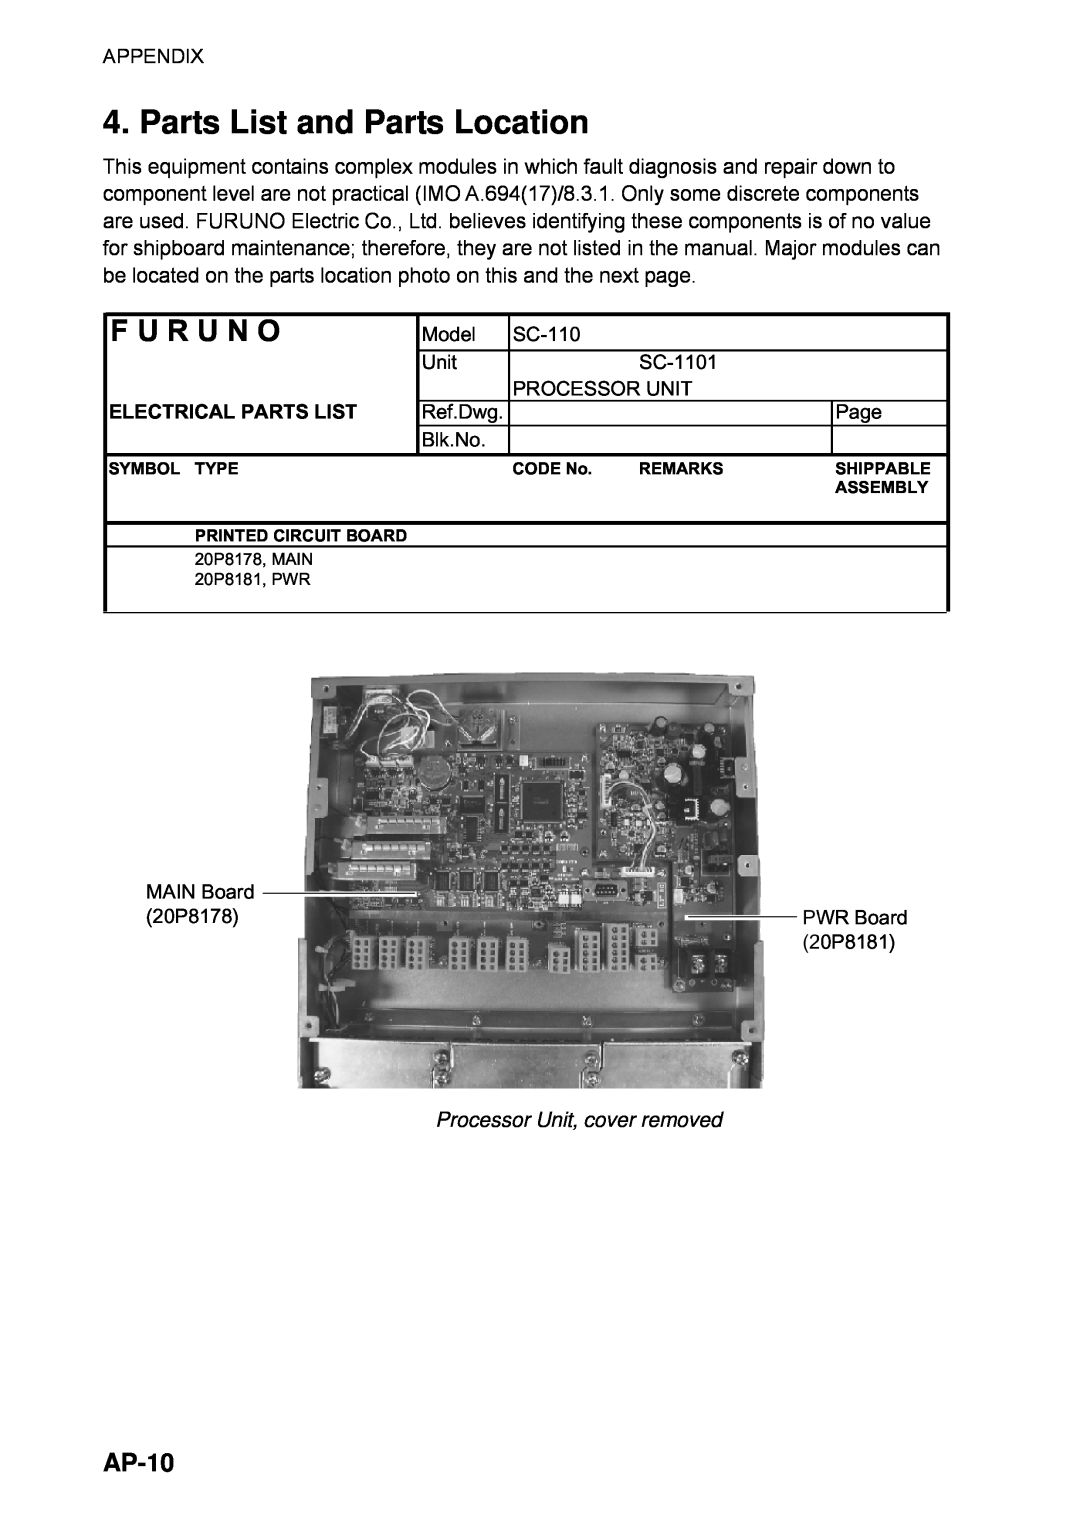 Furuno SC-110 Parts List and Parts Location, F U R U N O, AP-10, Electrical Parts List, Processor Unit, cover removed 